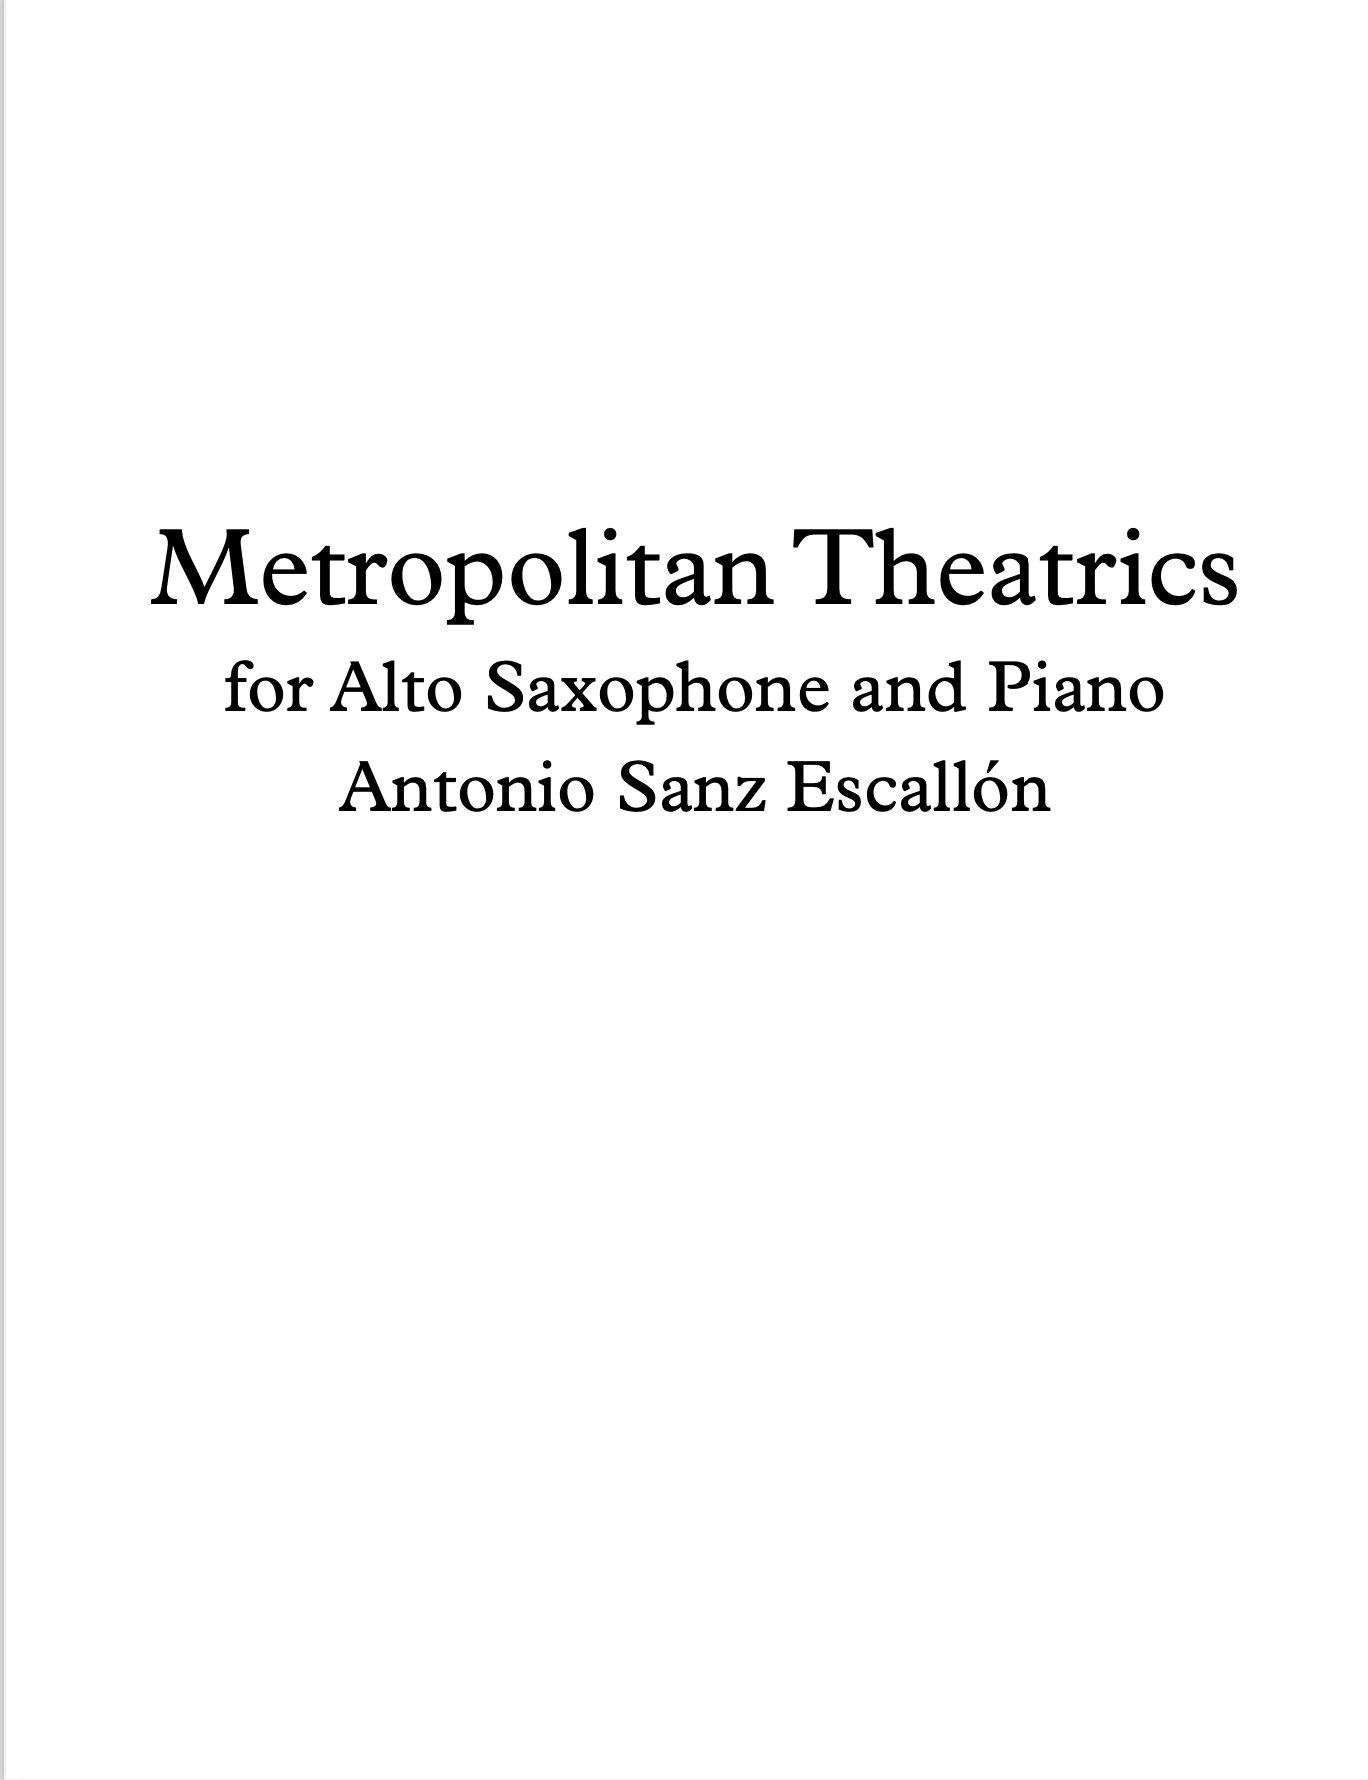 Metropolitan Theatrics by Antonio Sanz Escallón